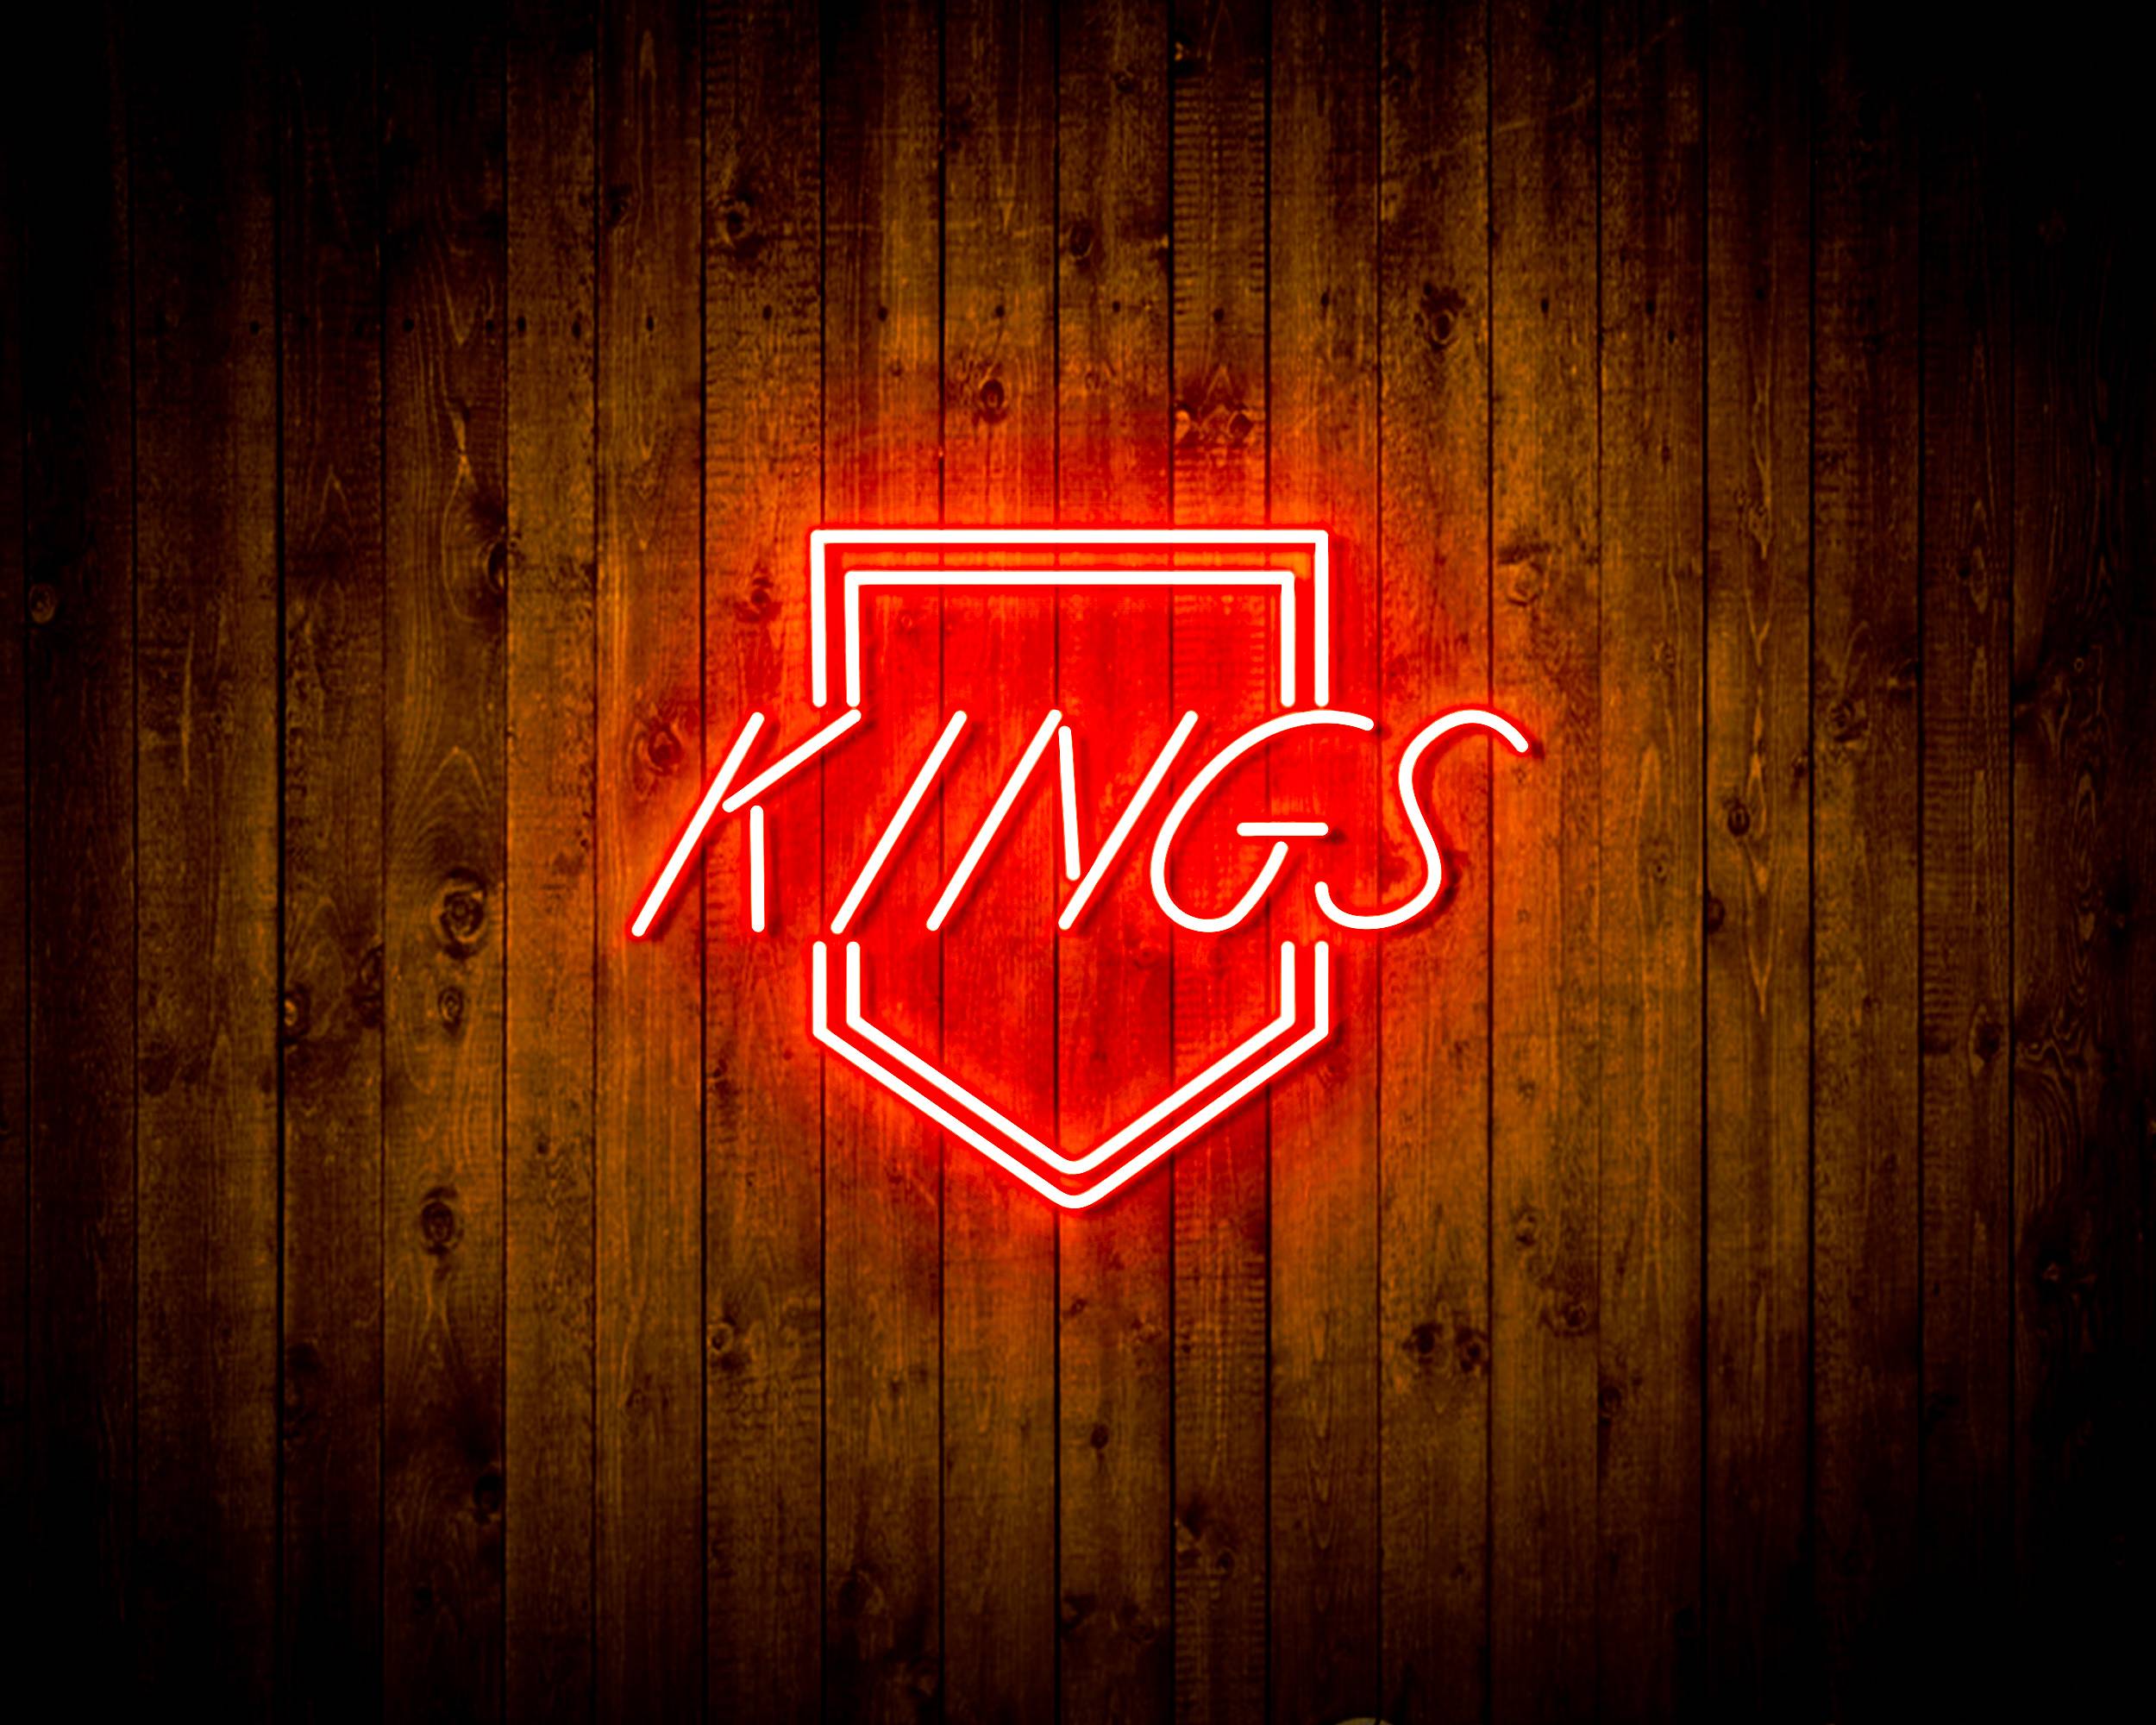 NHL Los Angeles Kings Handmade LED Neon Light Sign